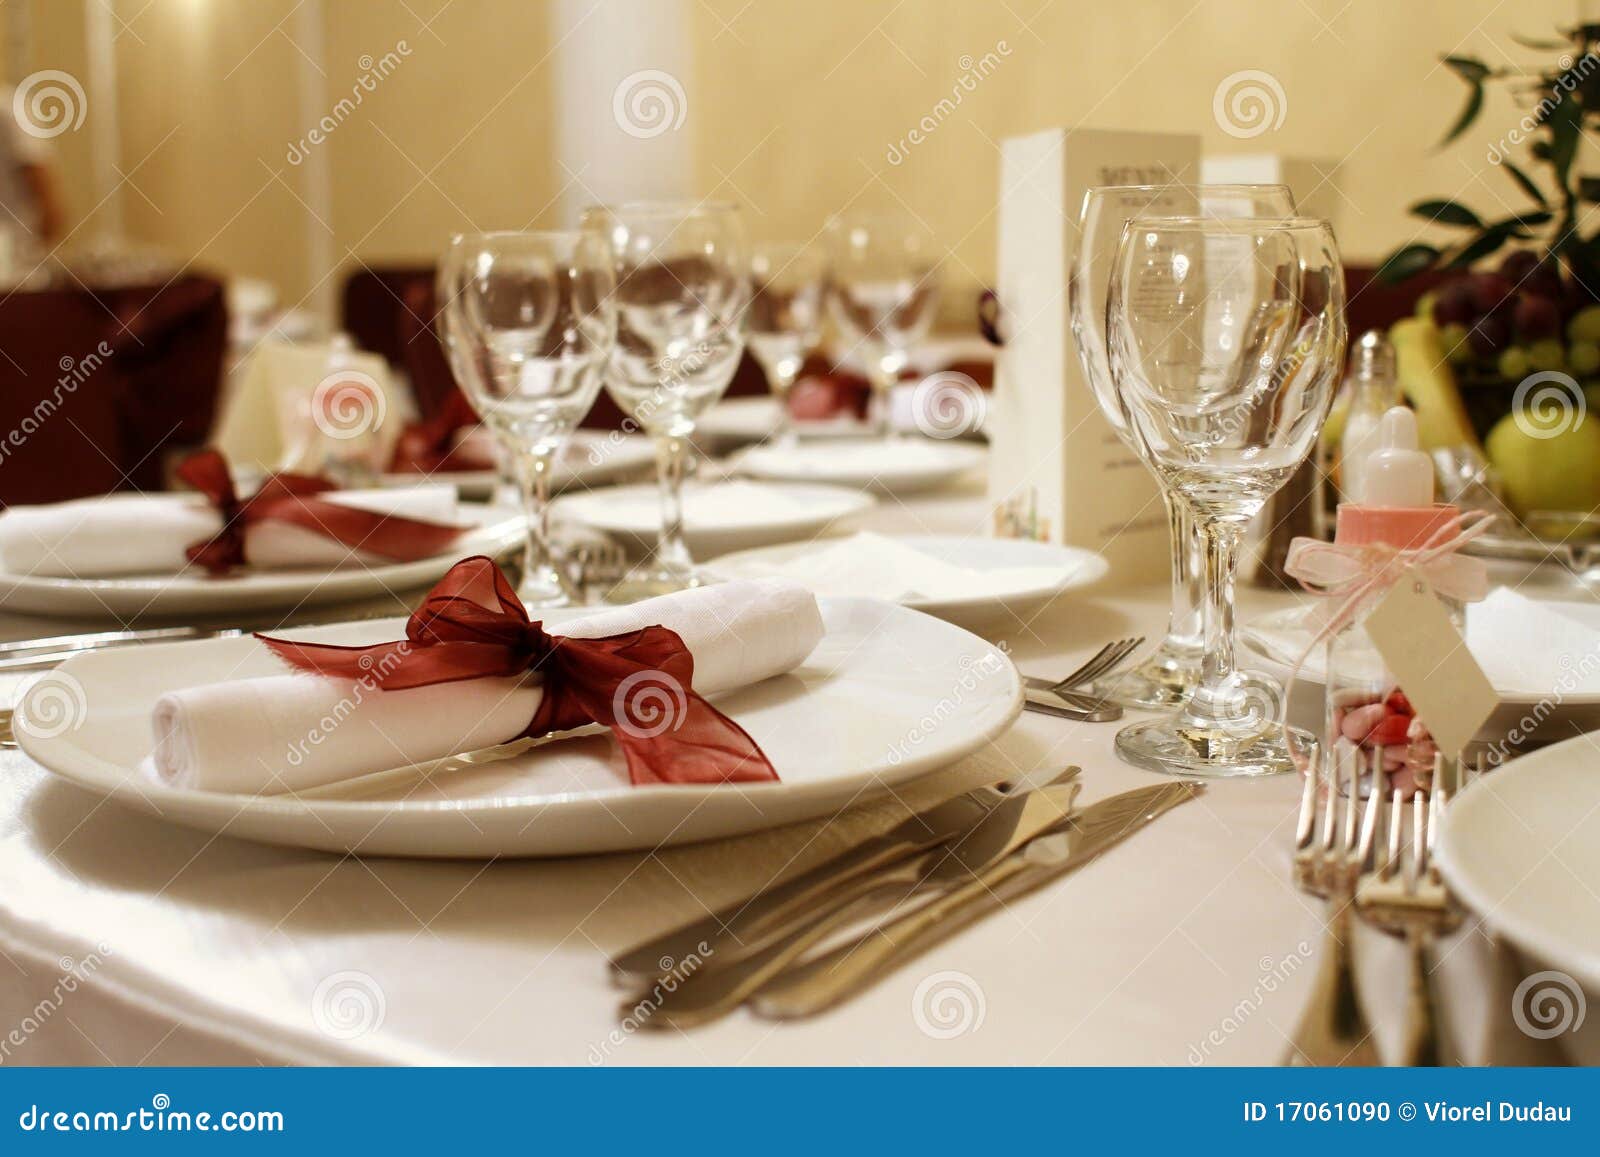 elegant wedding party table